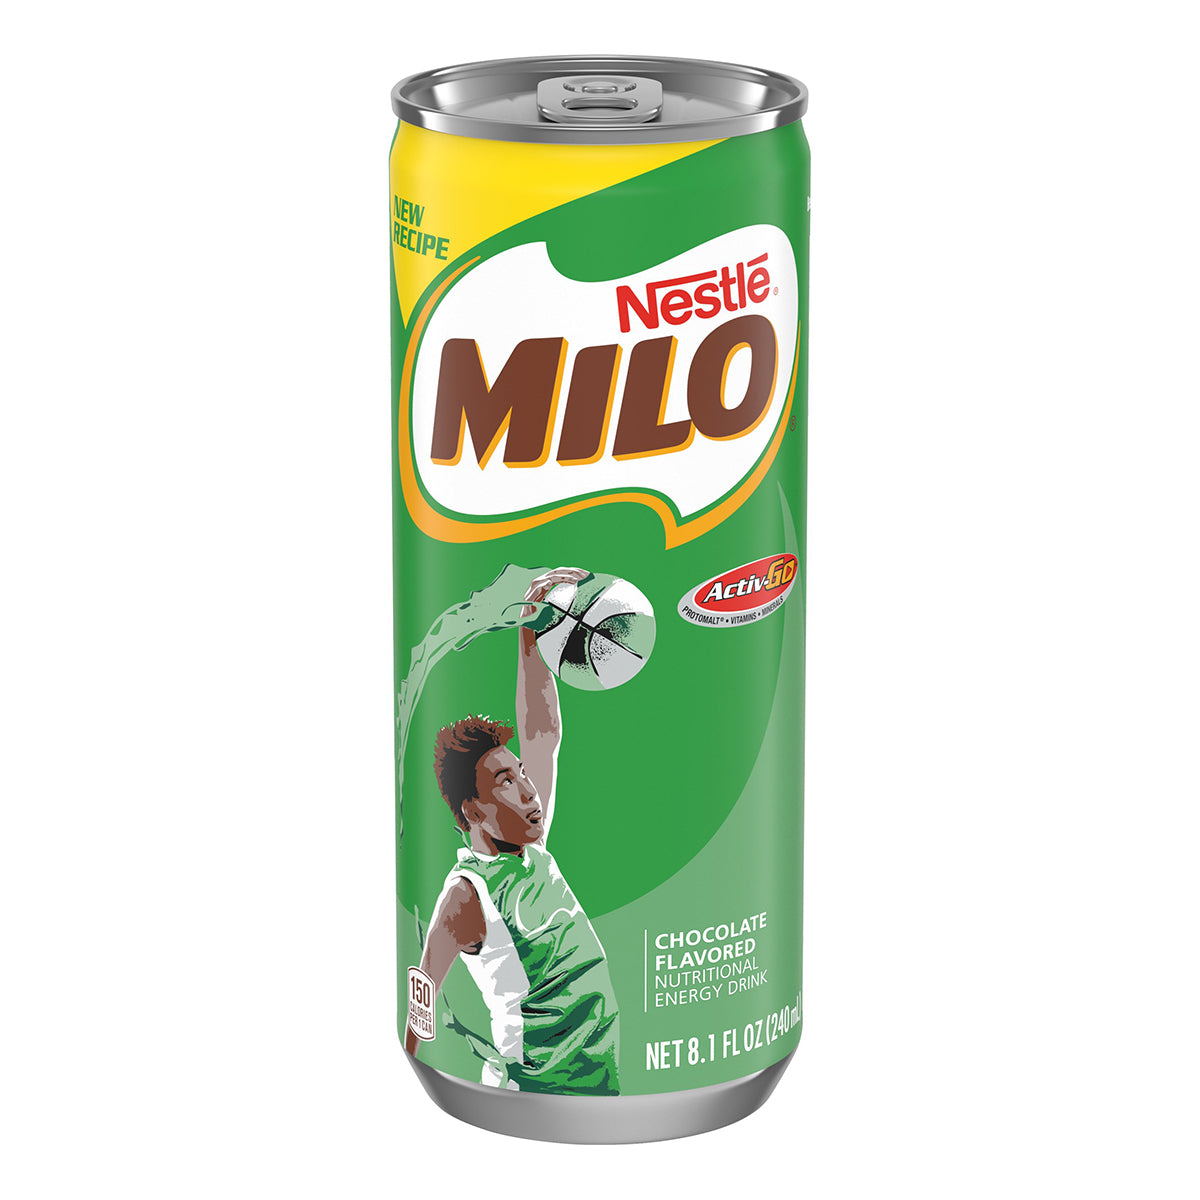 milo energy drink - 8fl oz